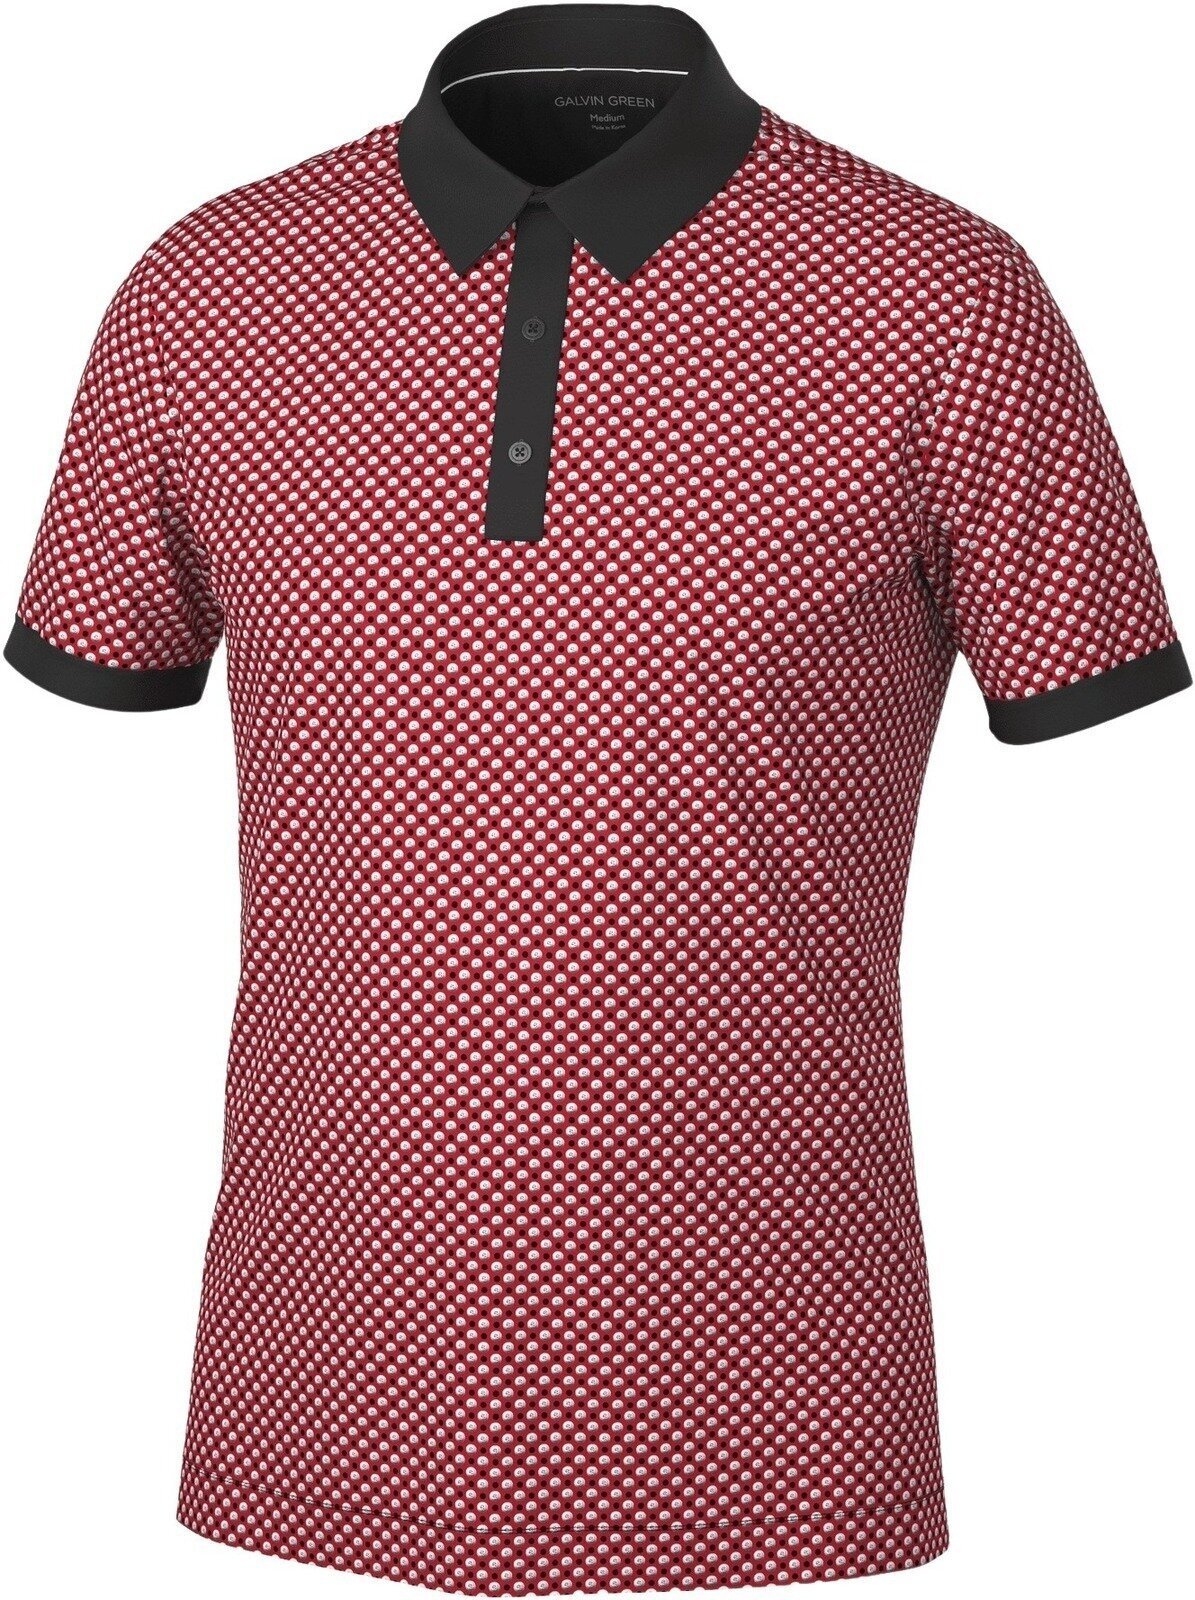 Camiseta polo Galvin Green Mate Mens Polo Shirt Red/Black S Camiseta polo